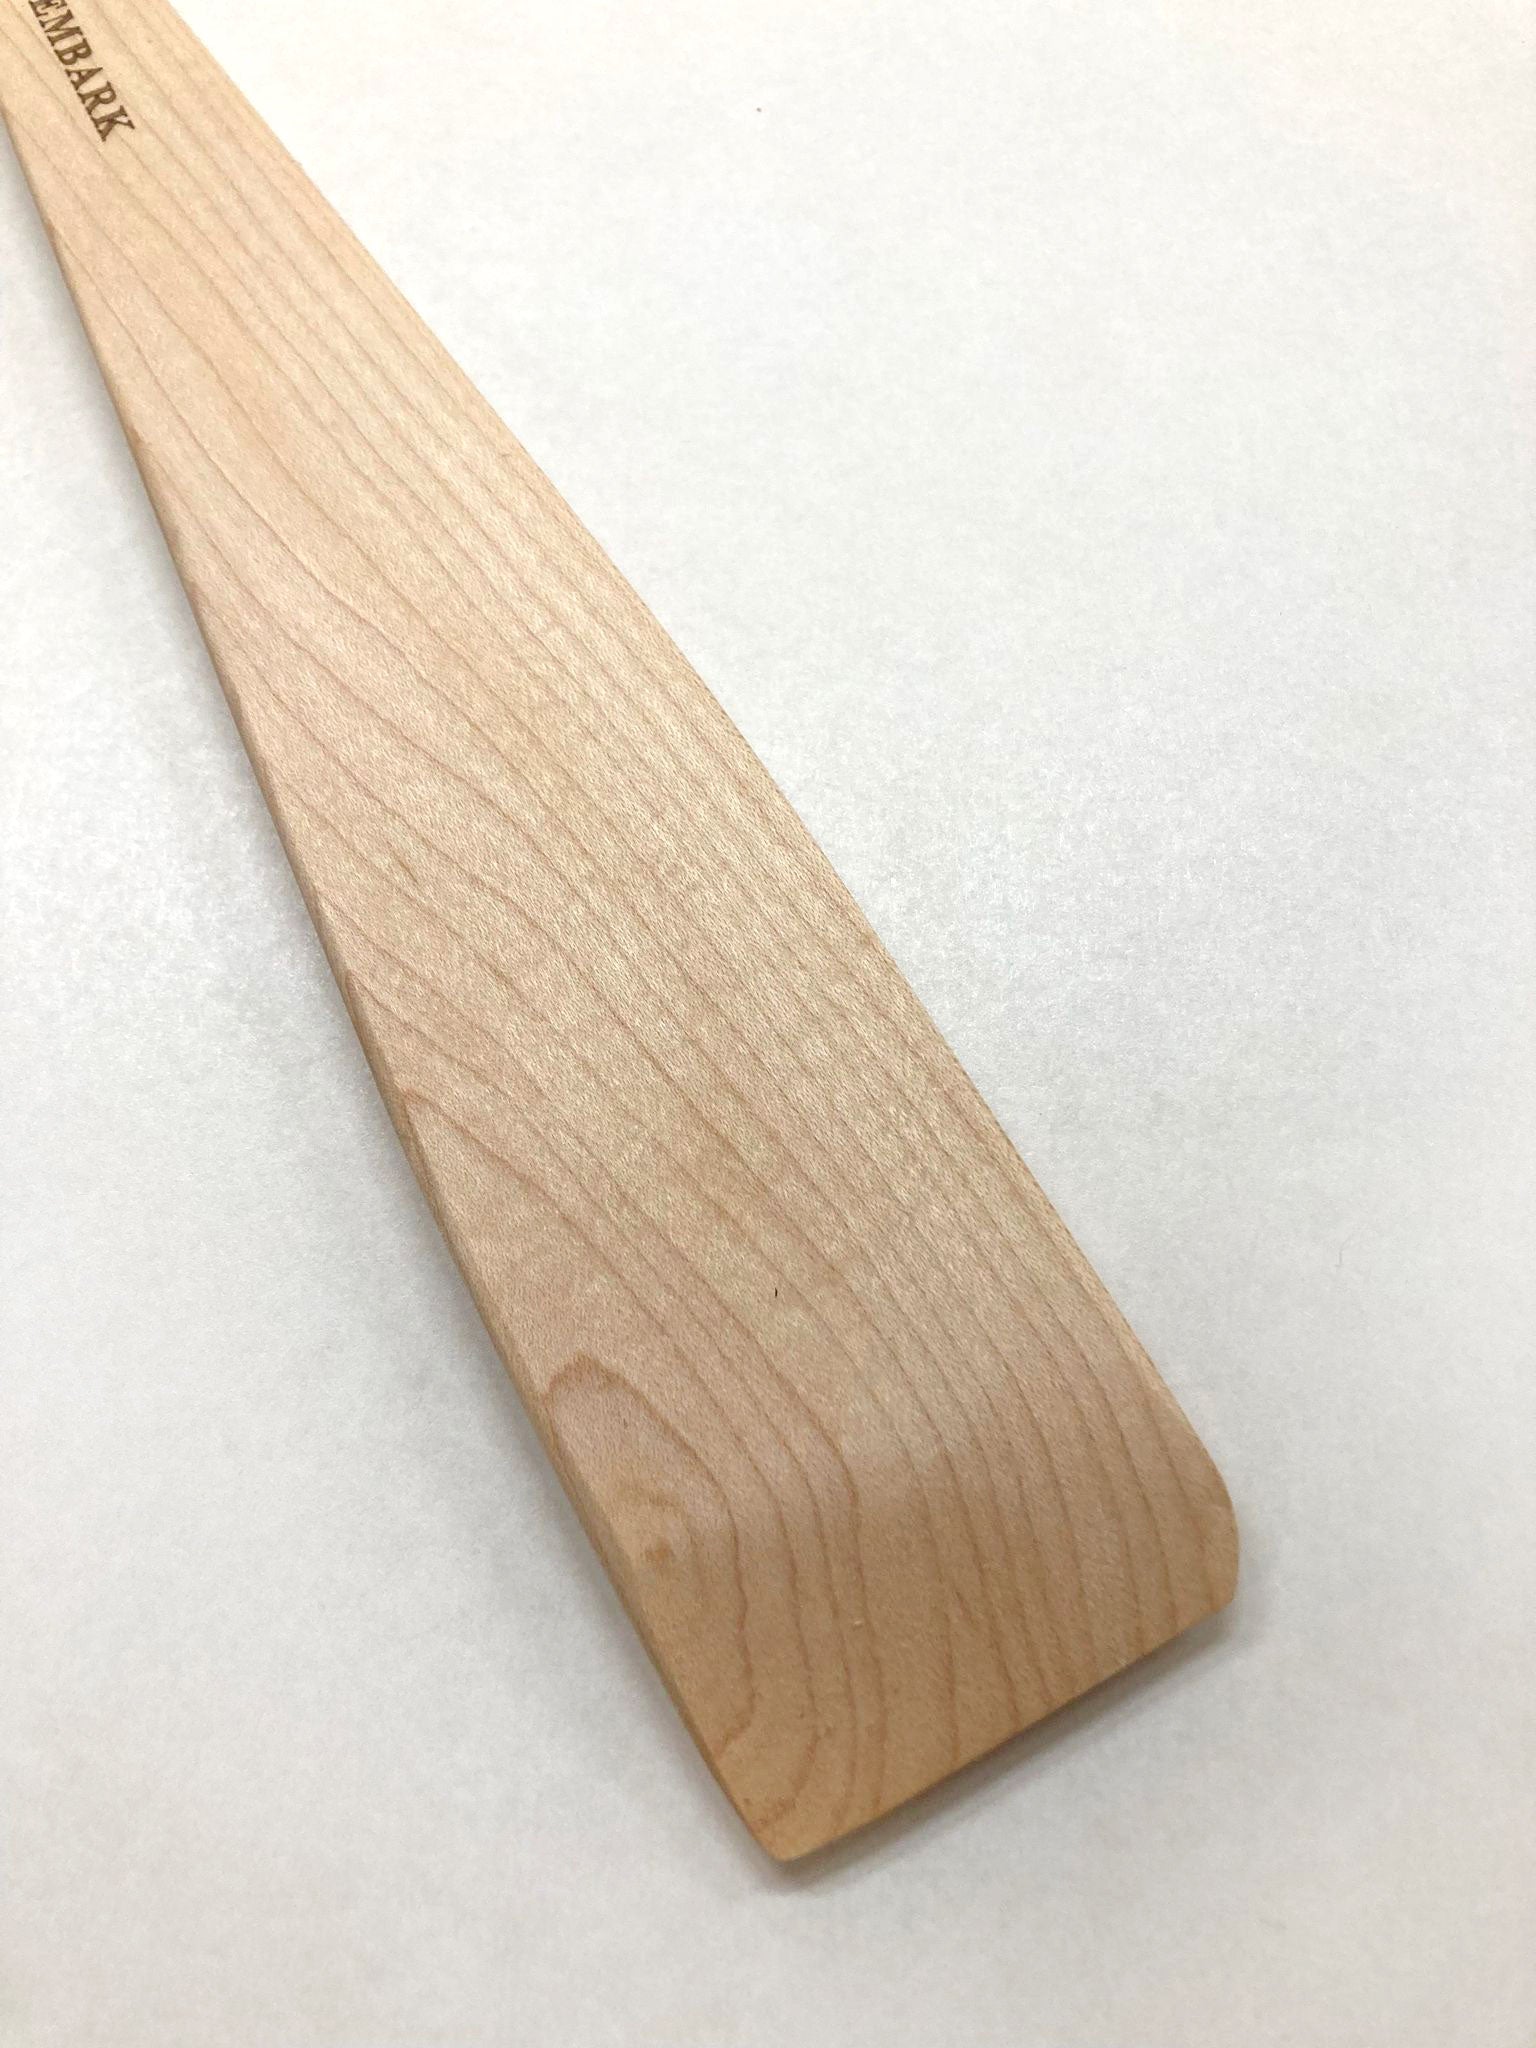 Handmade Maple Wood Flat Paddle Spatula - Four Leaf Wood Shop